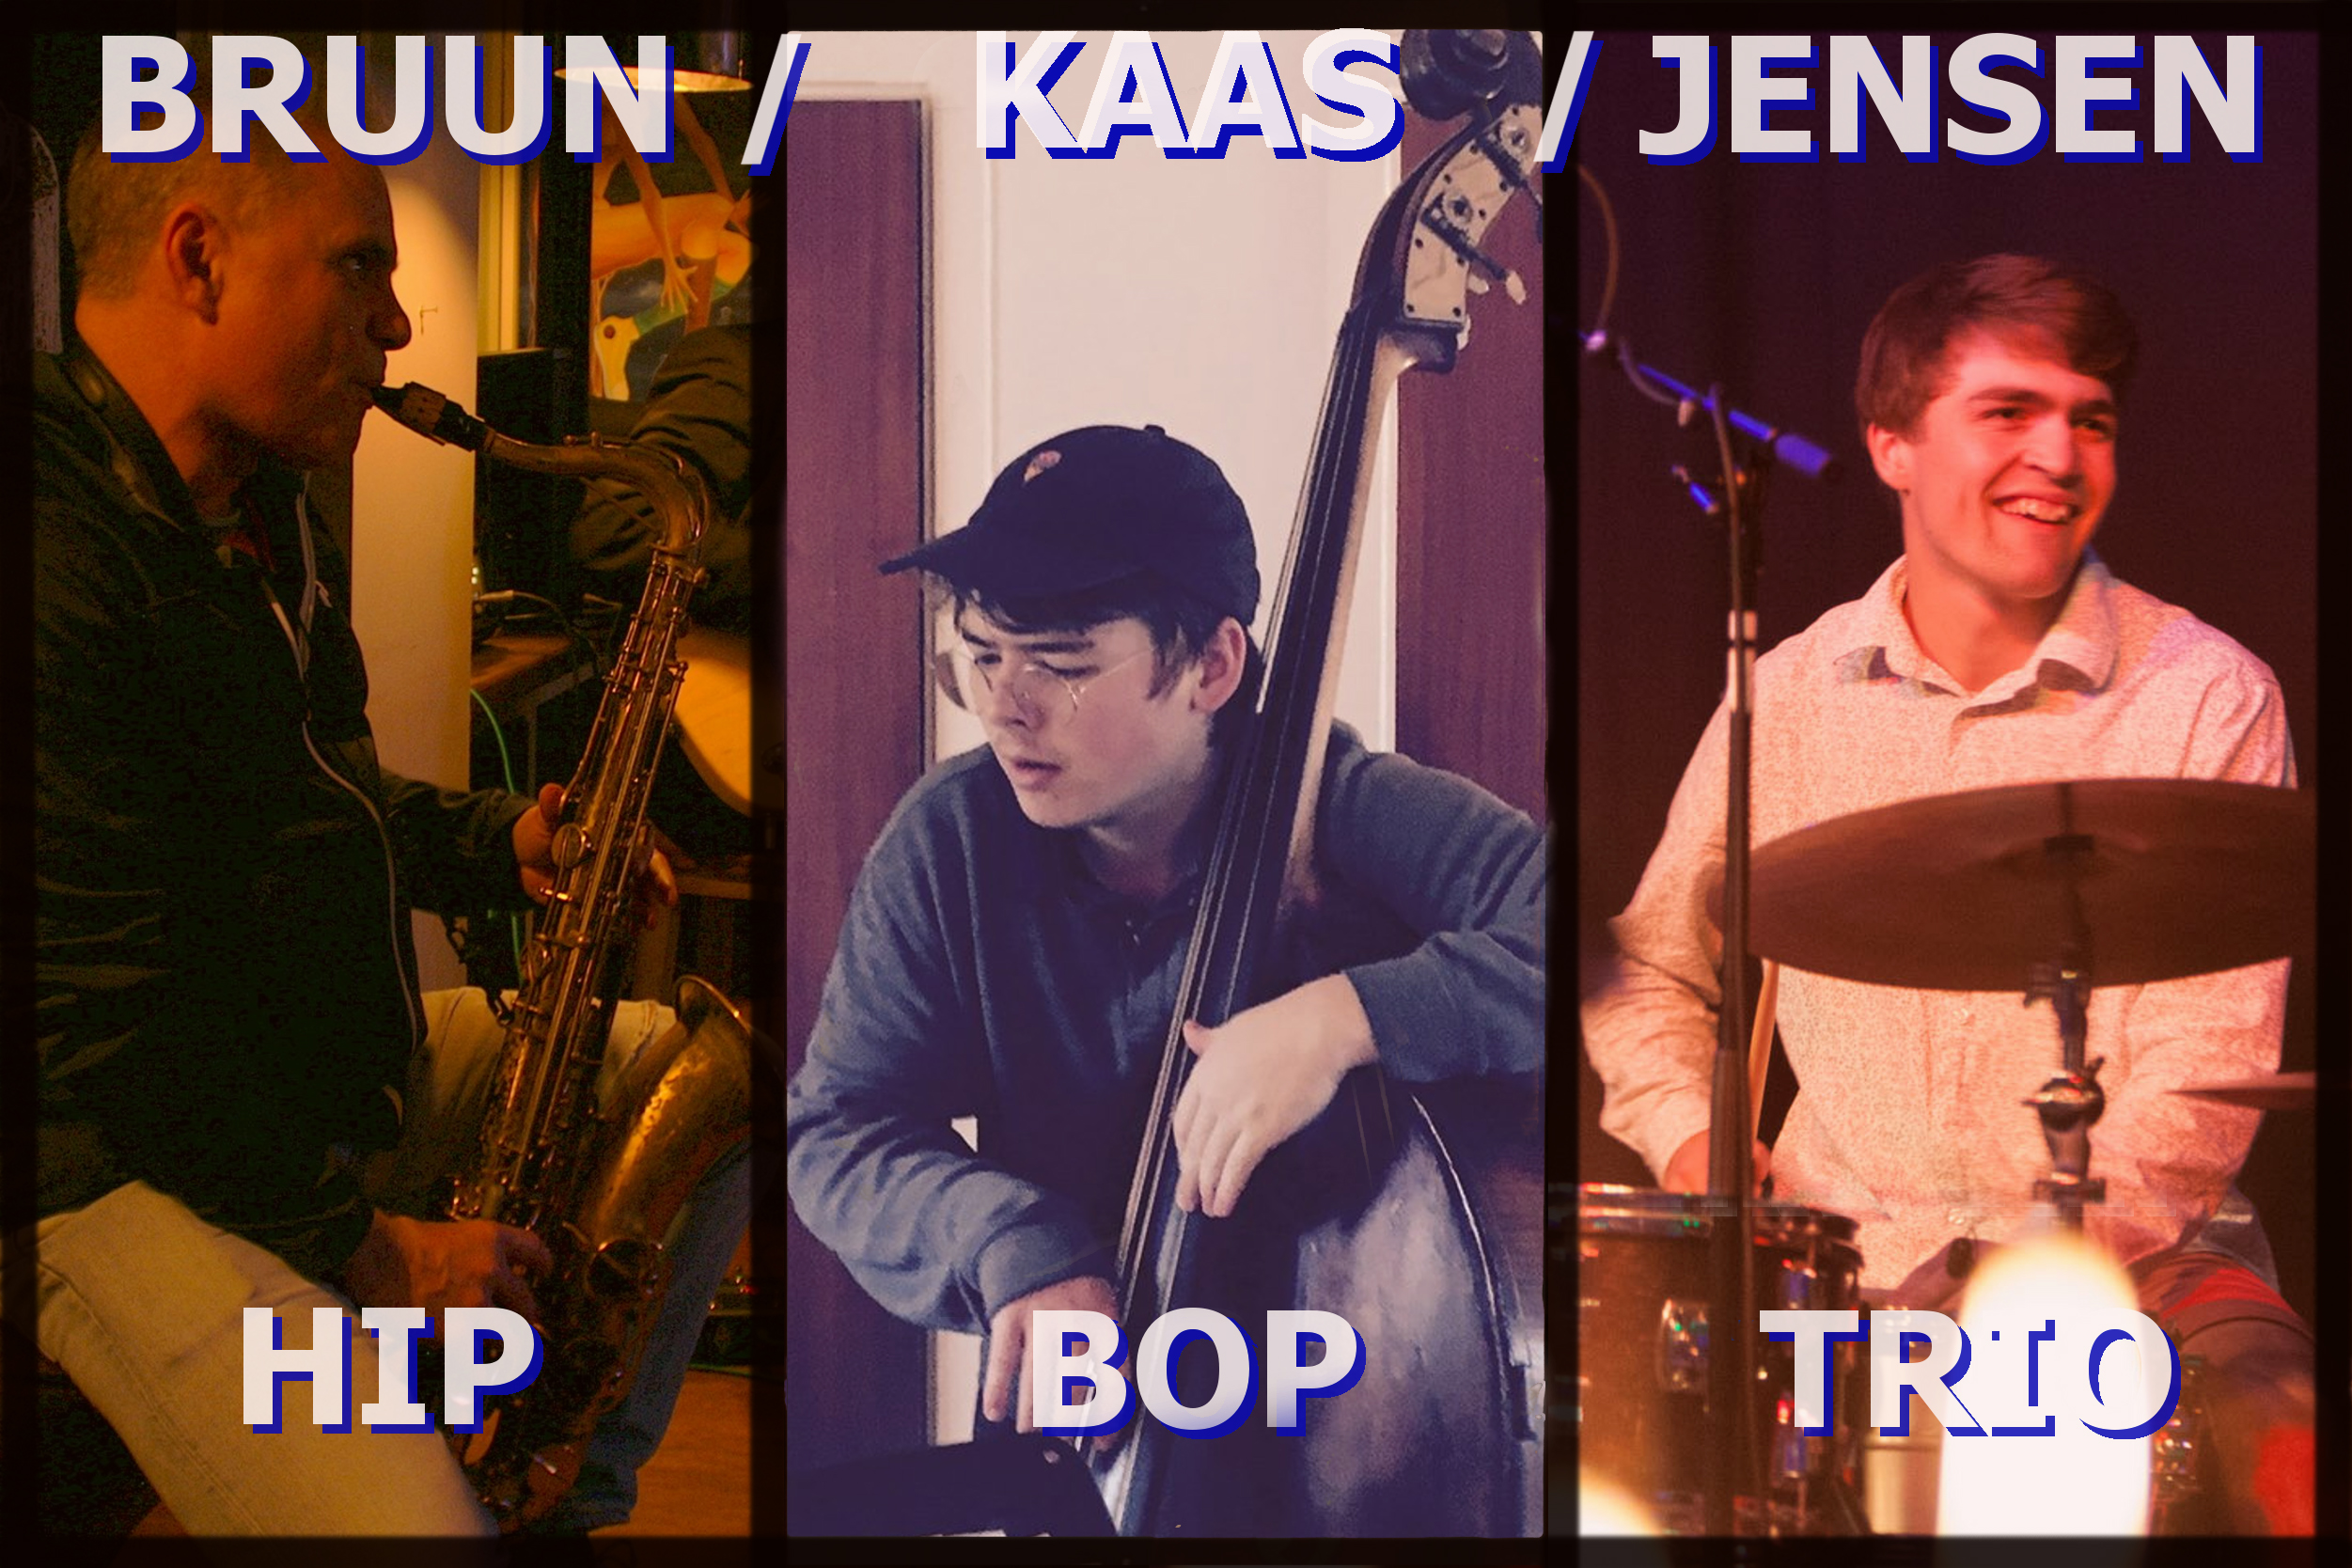 Bruun / Kaas / Jensen Hip Bop Trio ((DK)) - Photo: 